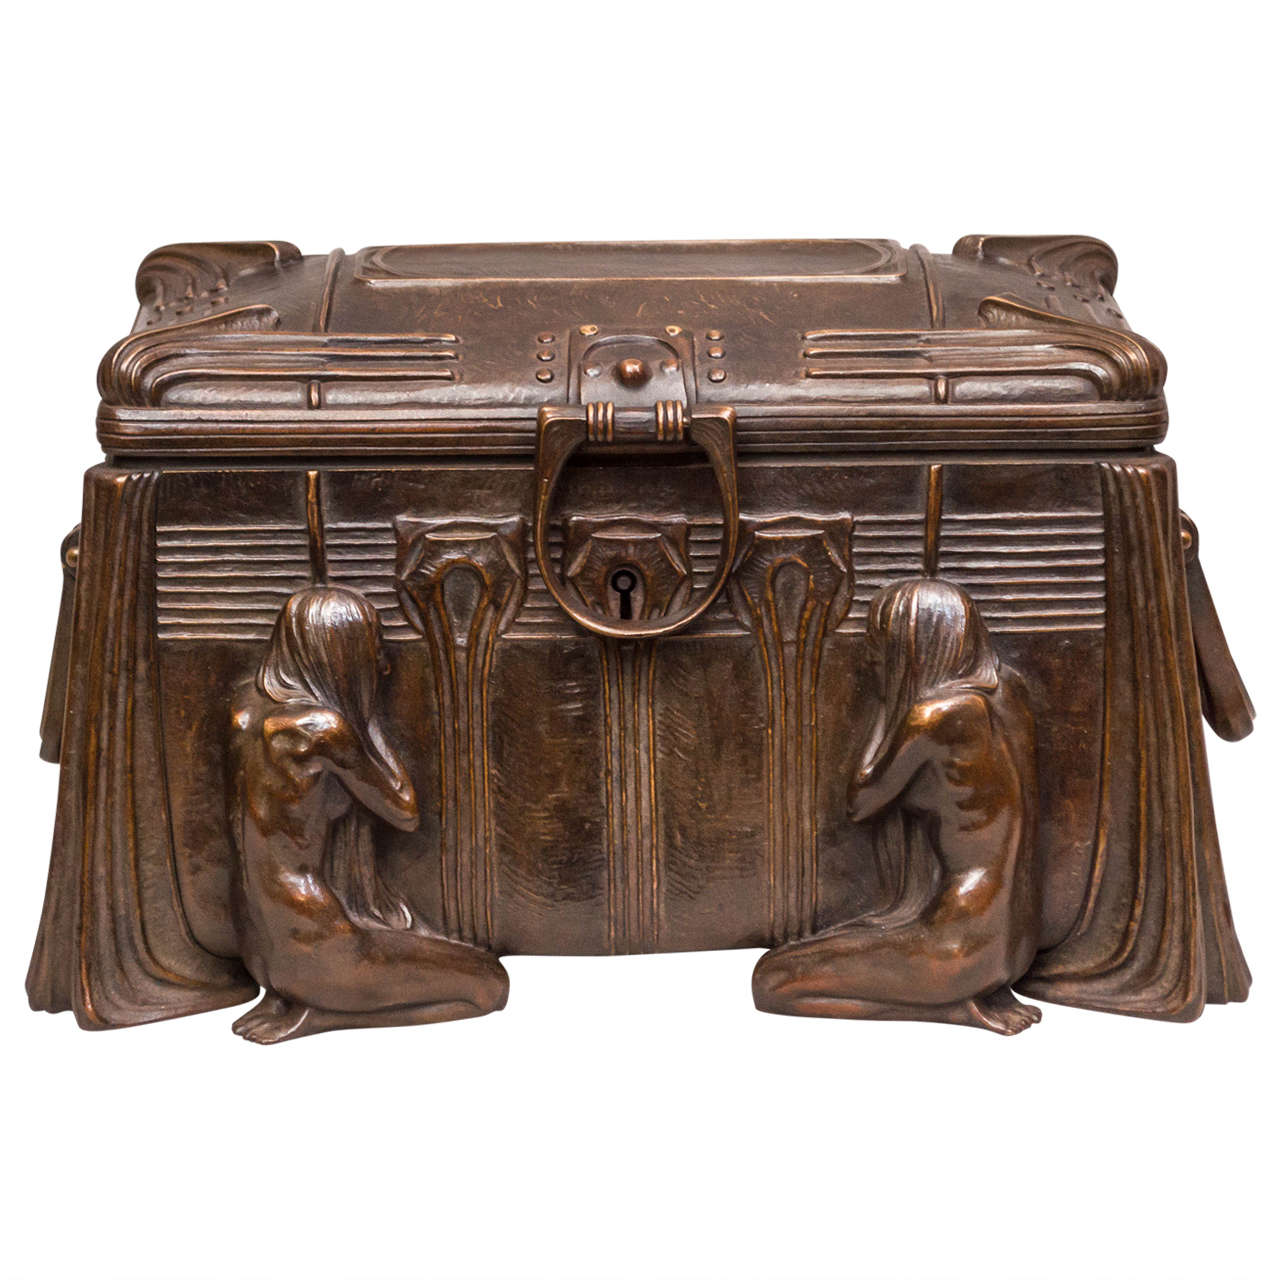 Art Nouveau / Secessionist, Bronze Box or Jewelry Casket, Signed Gurschner